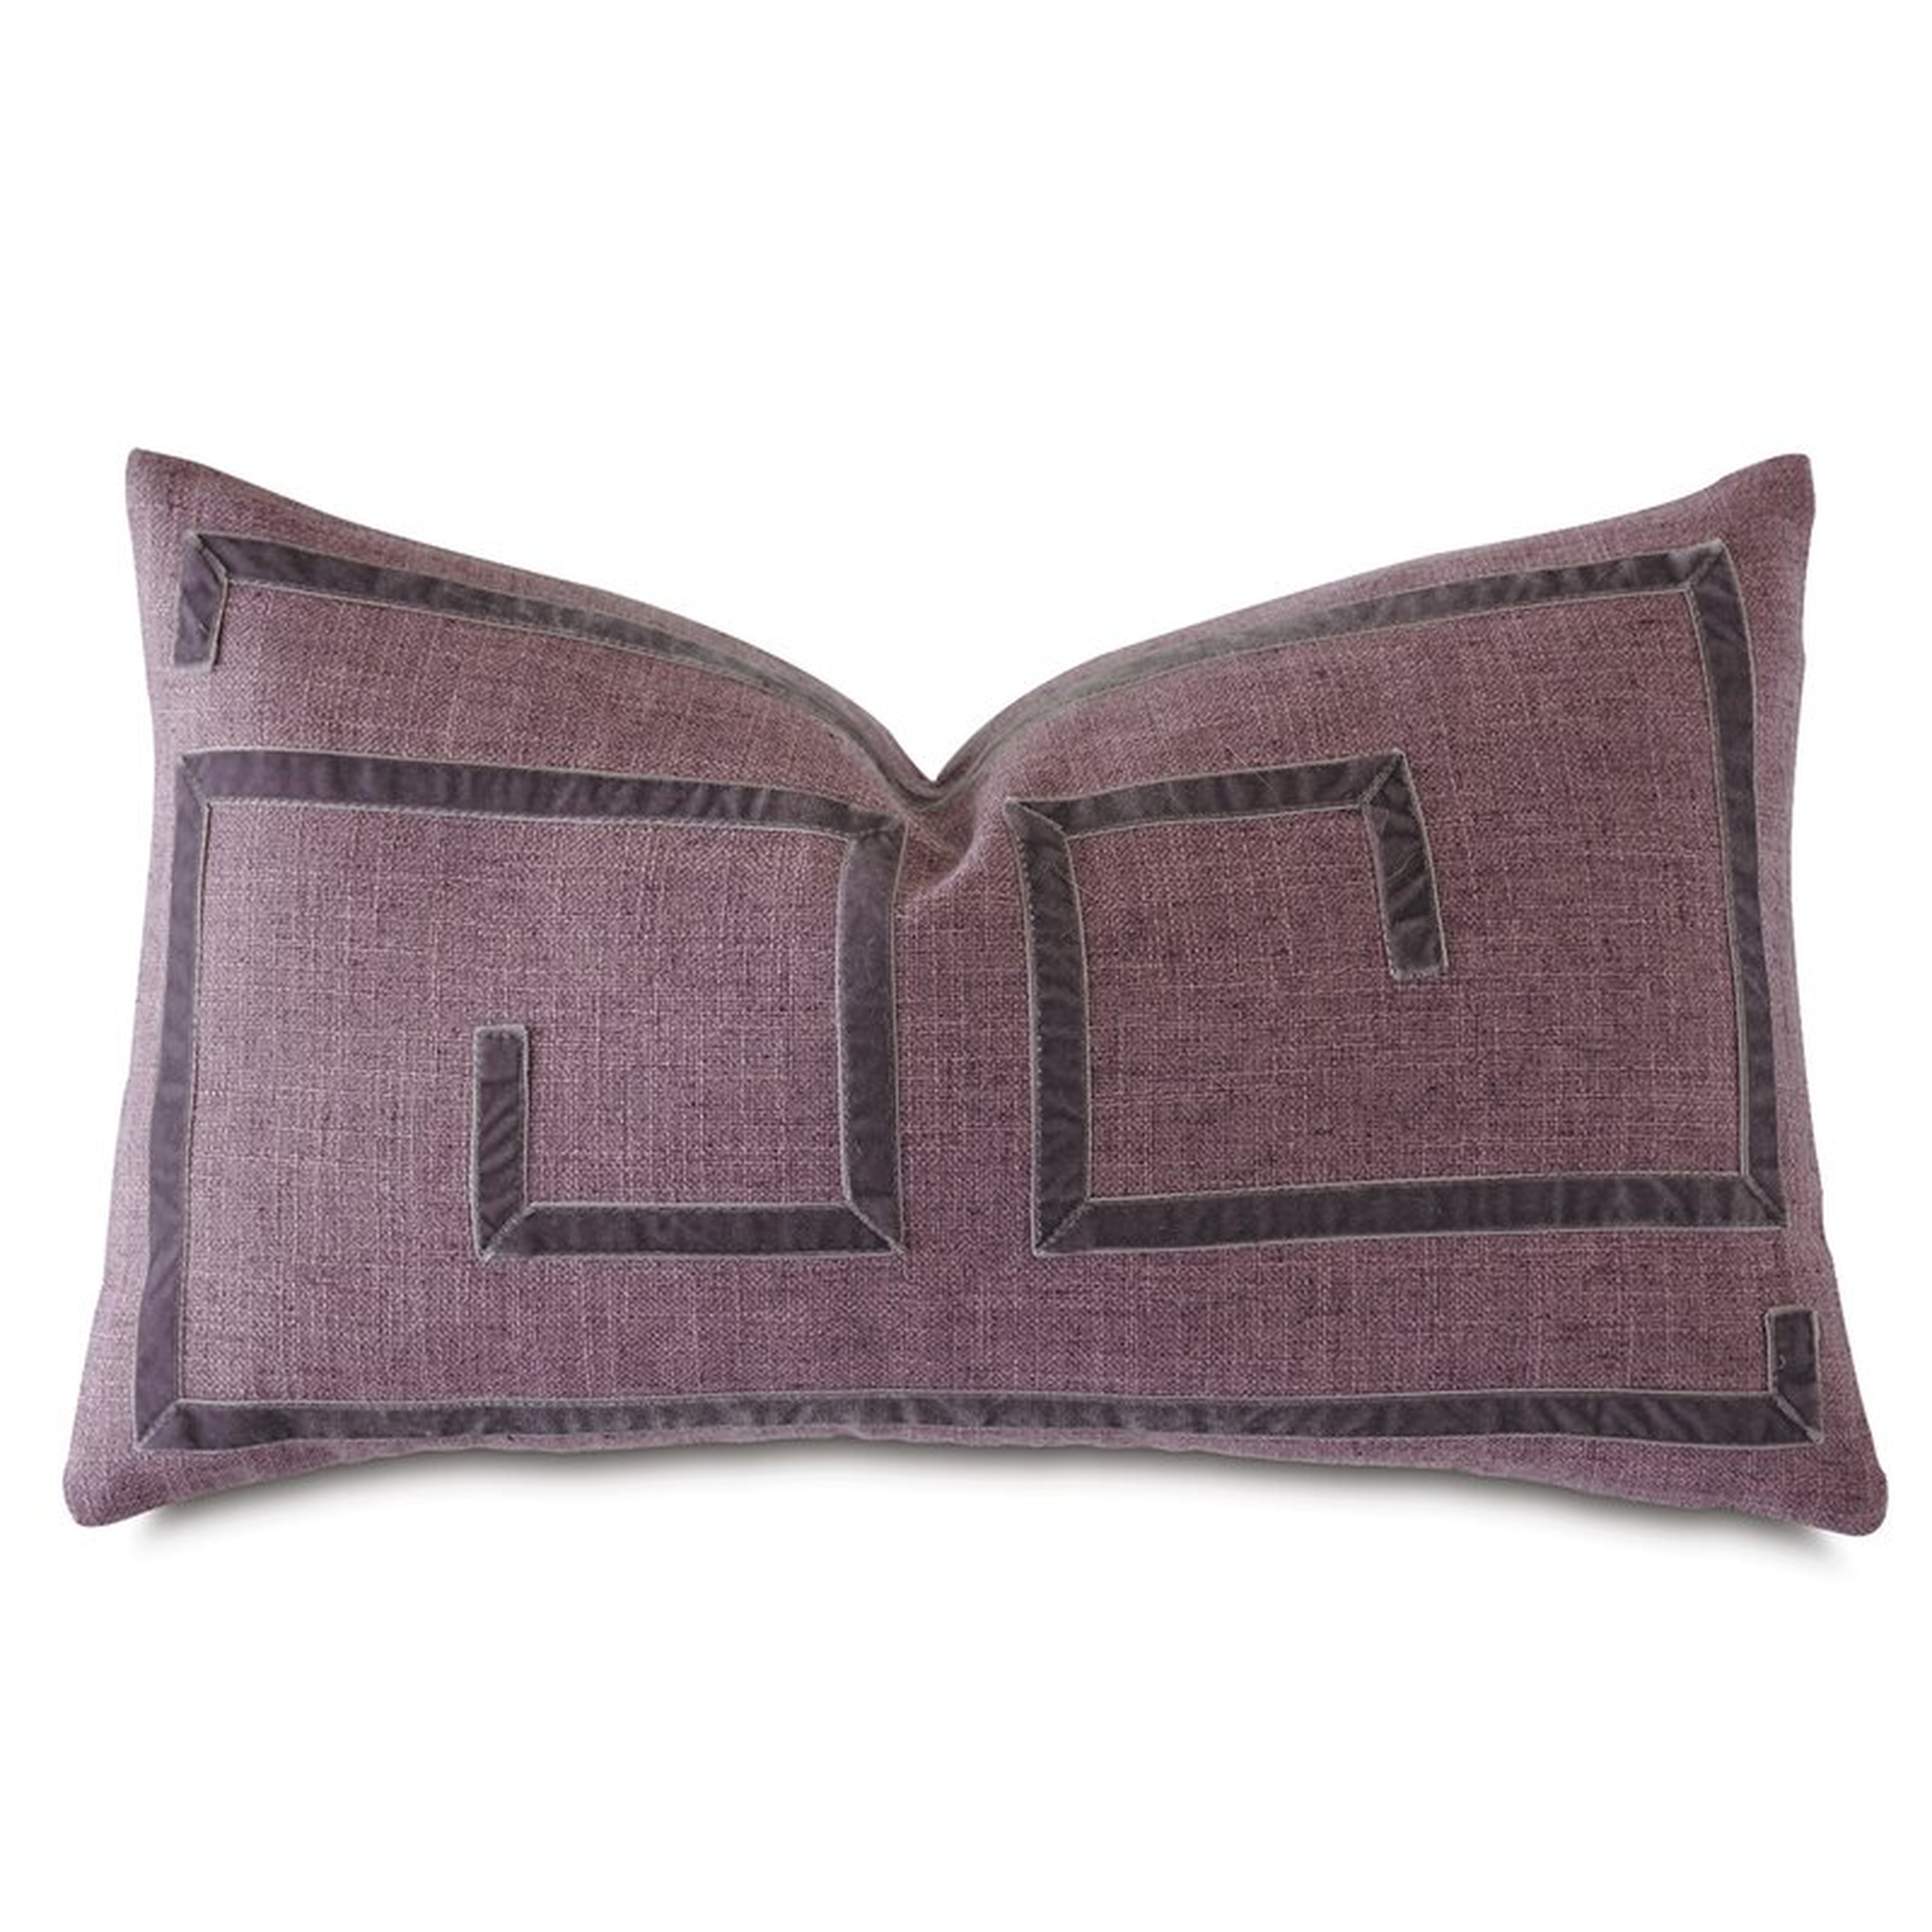 Eastern Accents Alexa Hampton Sherlock Decorative Lumbar Pillow Cover & Insert - Perigold